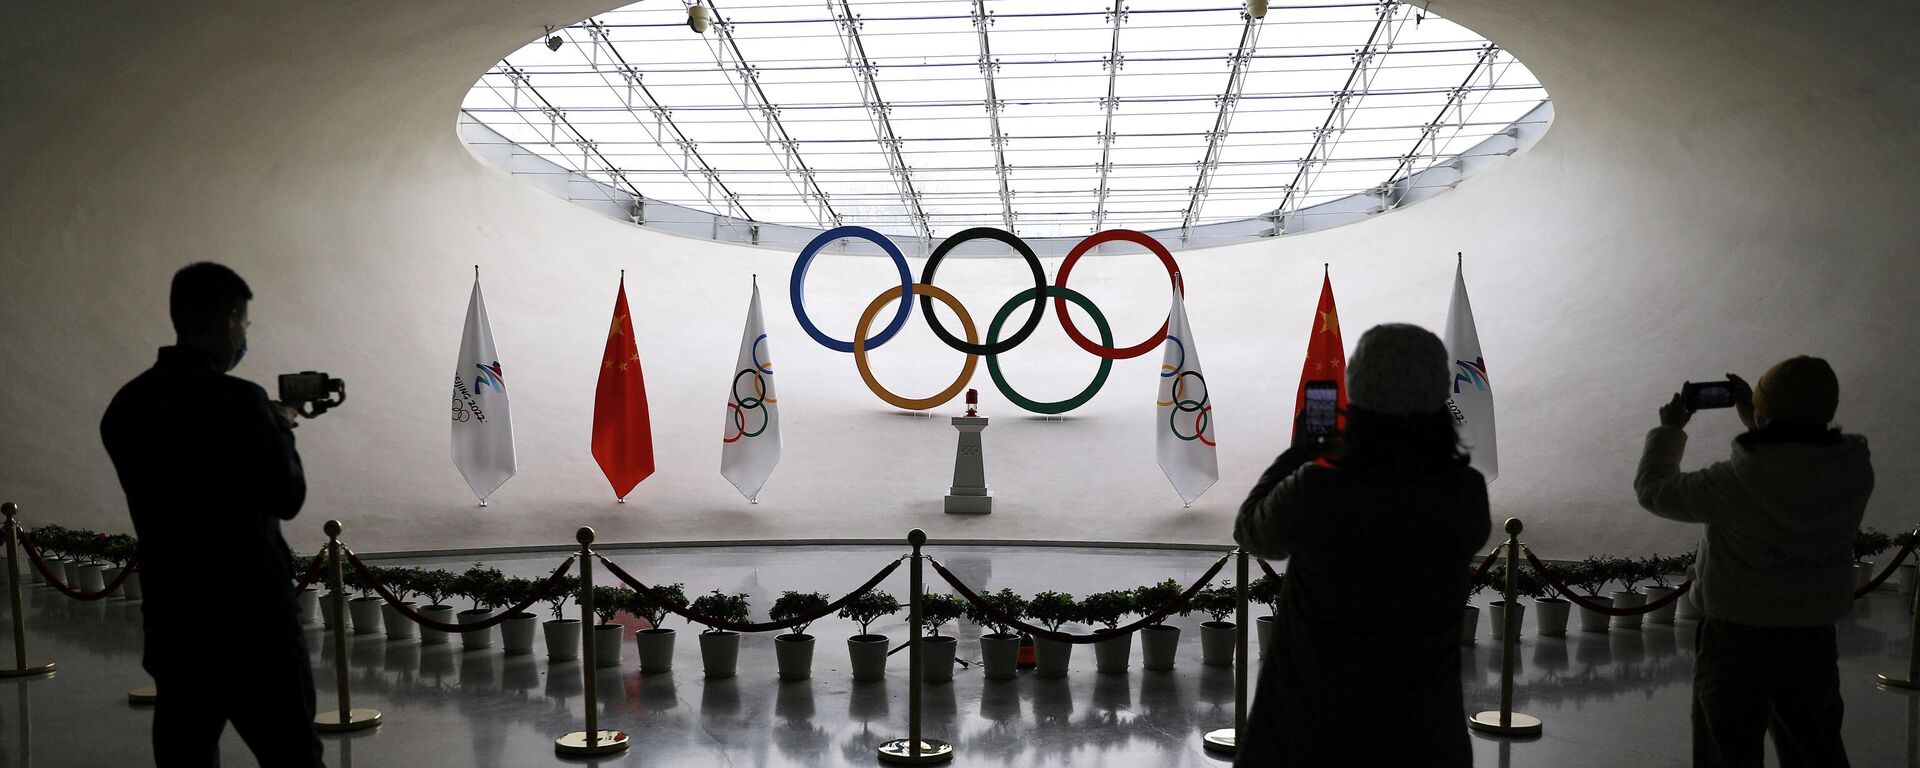 Juegos Olímpicos de Invierno de Pekín 2022 - Sputnik Mundo, 1920, 13.12.2021